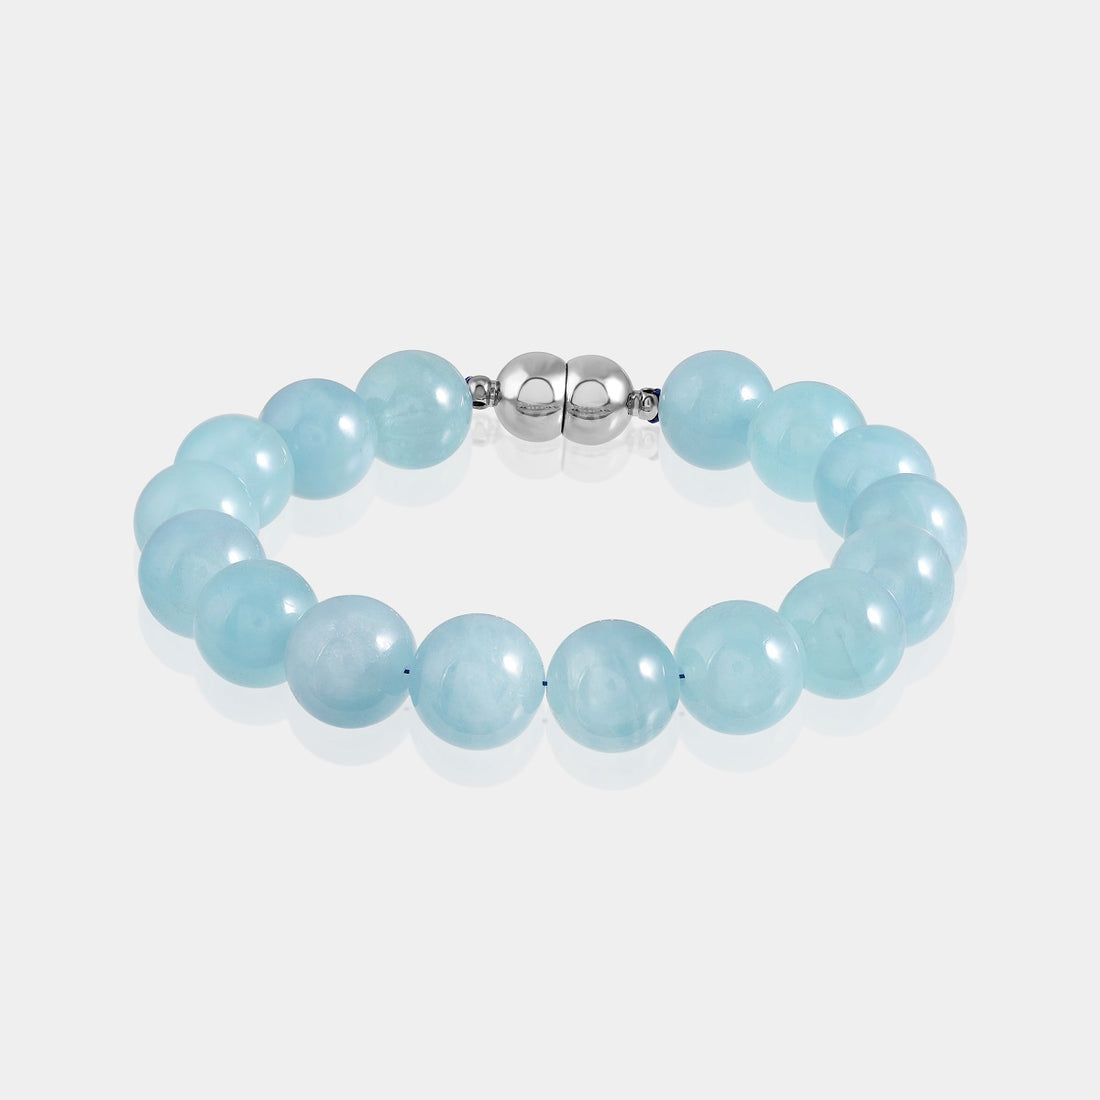 Natural Aquamarine Gemstone Beads Handmade Magnetic Lock Bracelet, showcasing soothing blue gemstone beads